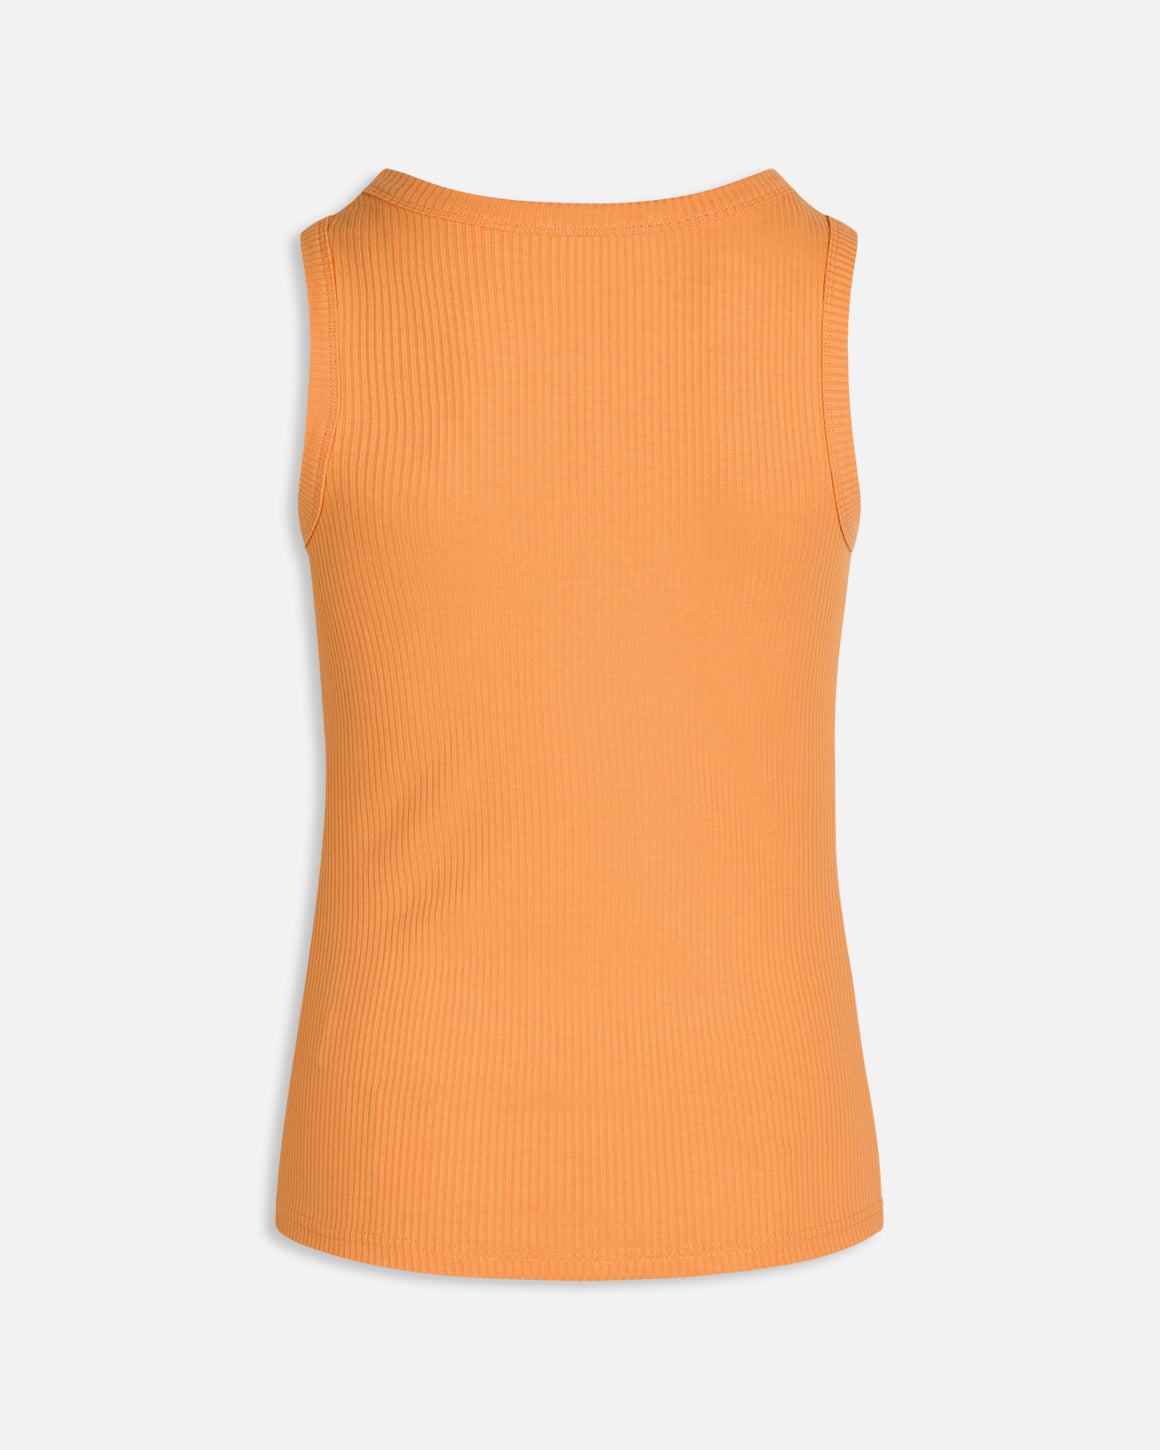 Eike-Ta2 oranje van Sisterpoint te koop bij LEEF mode en accessoires Meppel